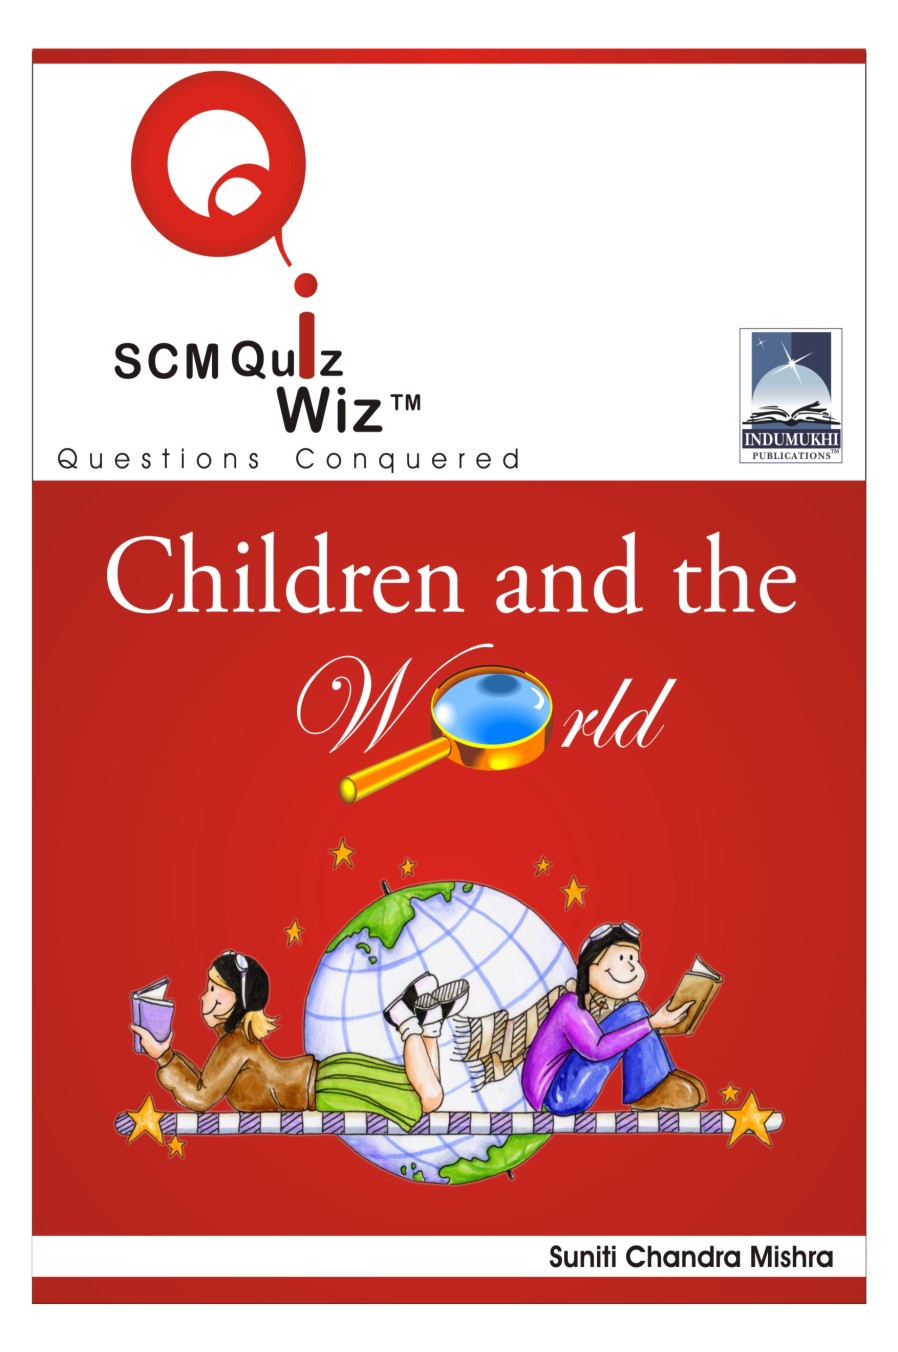 INDUMUKHI PUBLICATIONS SCM QUIZ WIZ (CHILDREN AND THE WORLD)